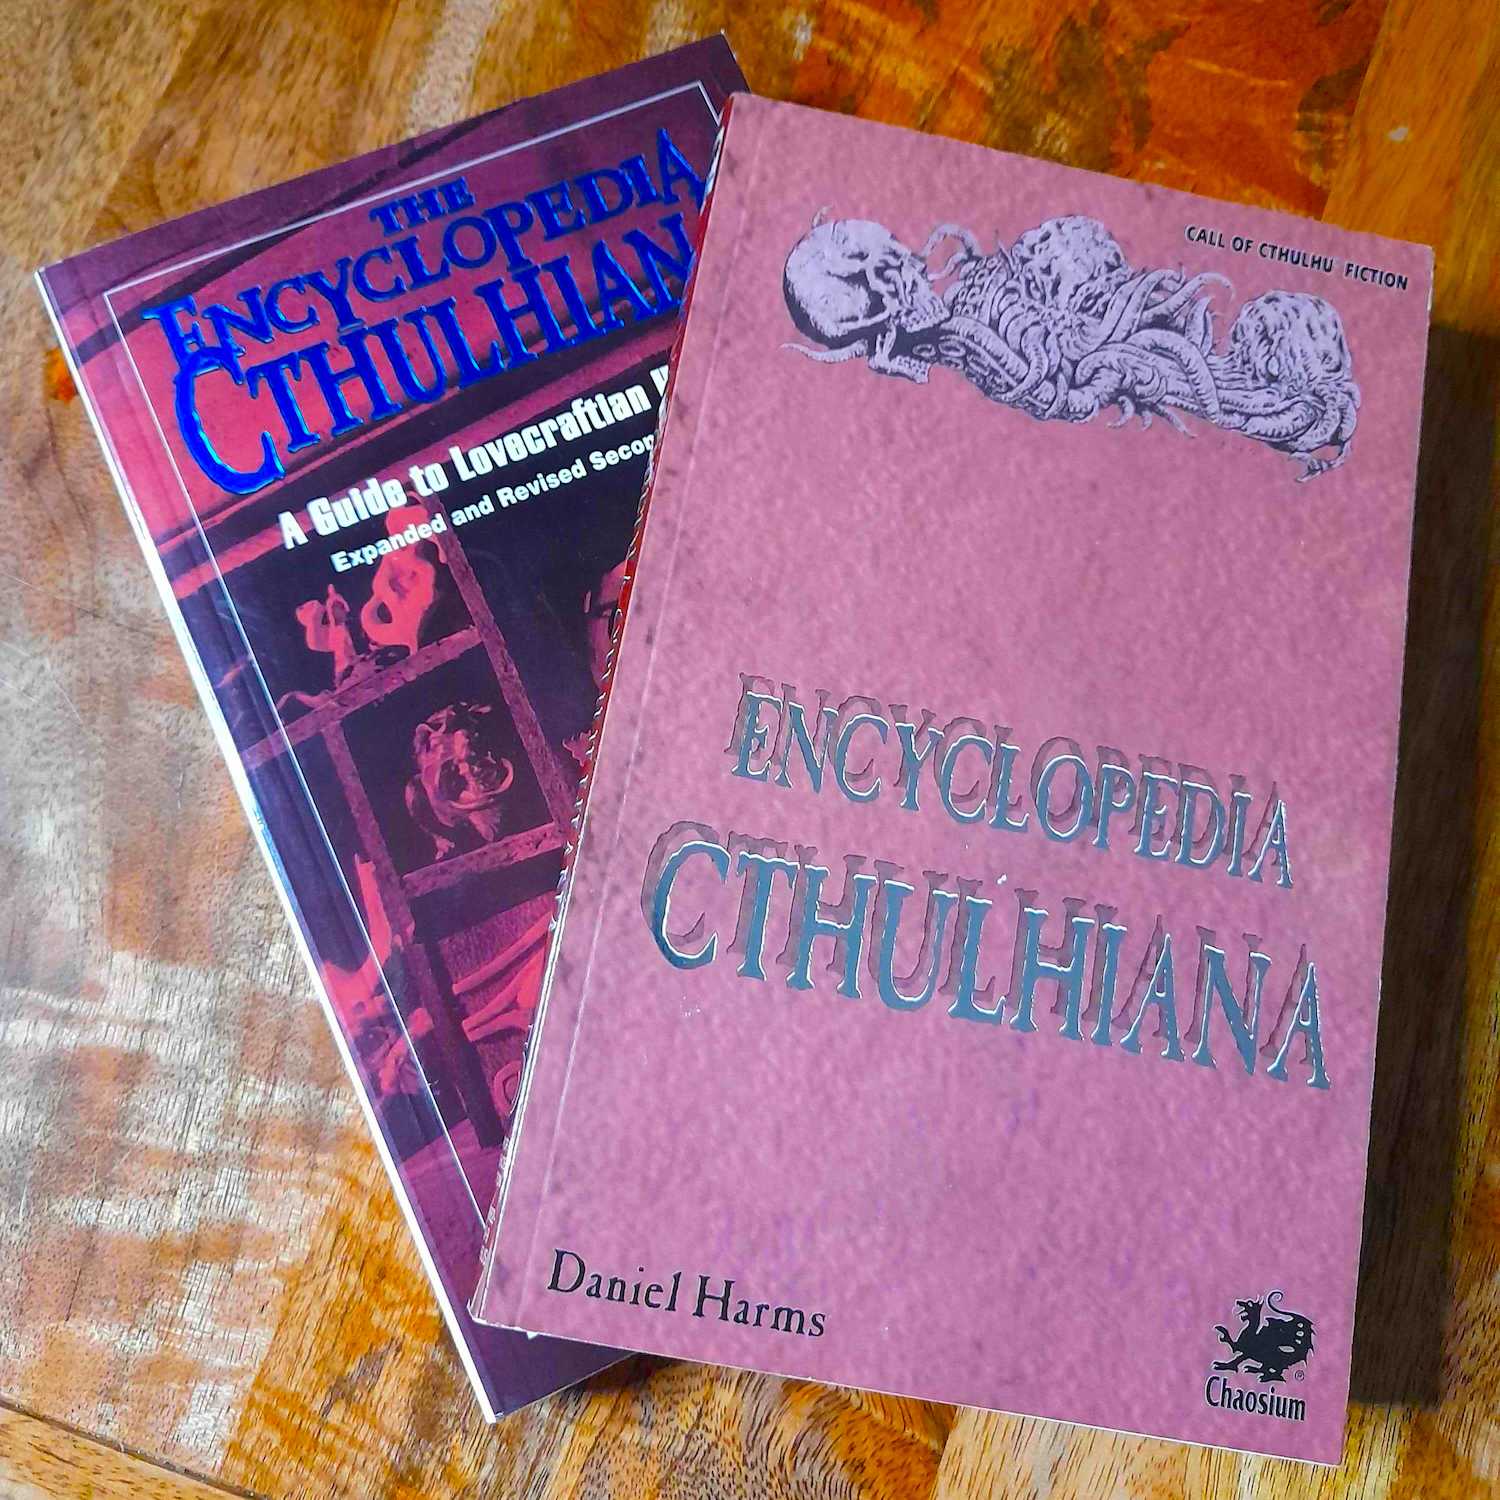 chaosium-announces-new-edition-of-daniel-harms-encyclopedia-cthulhiana